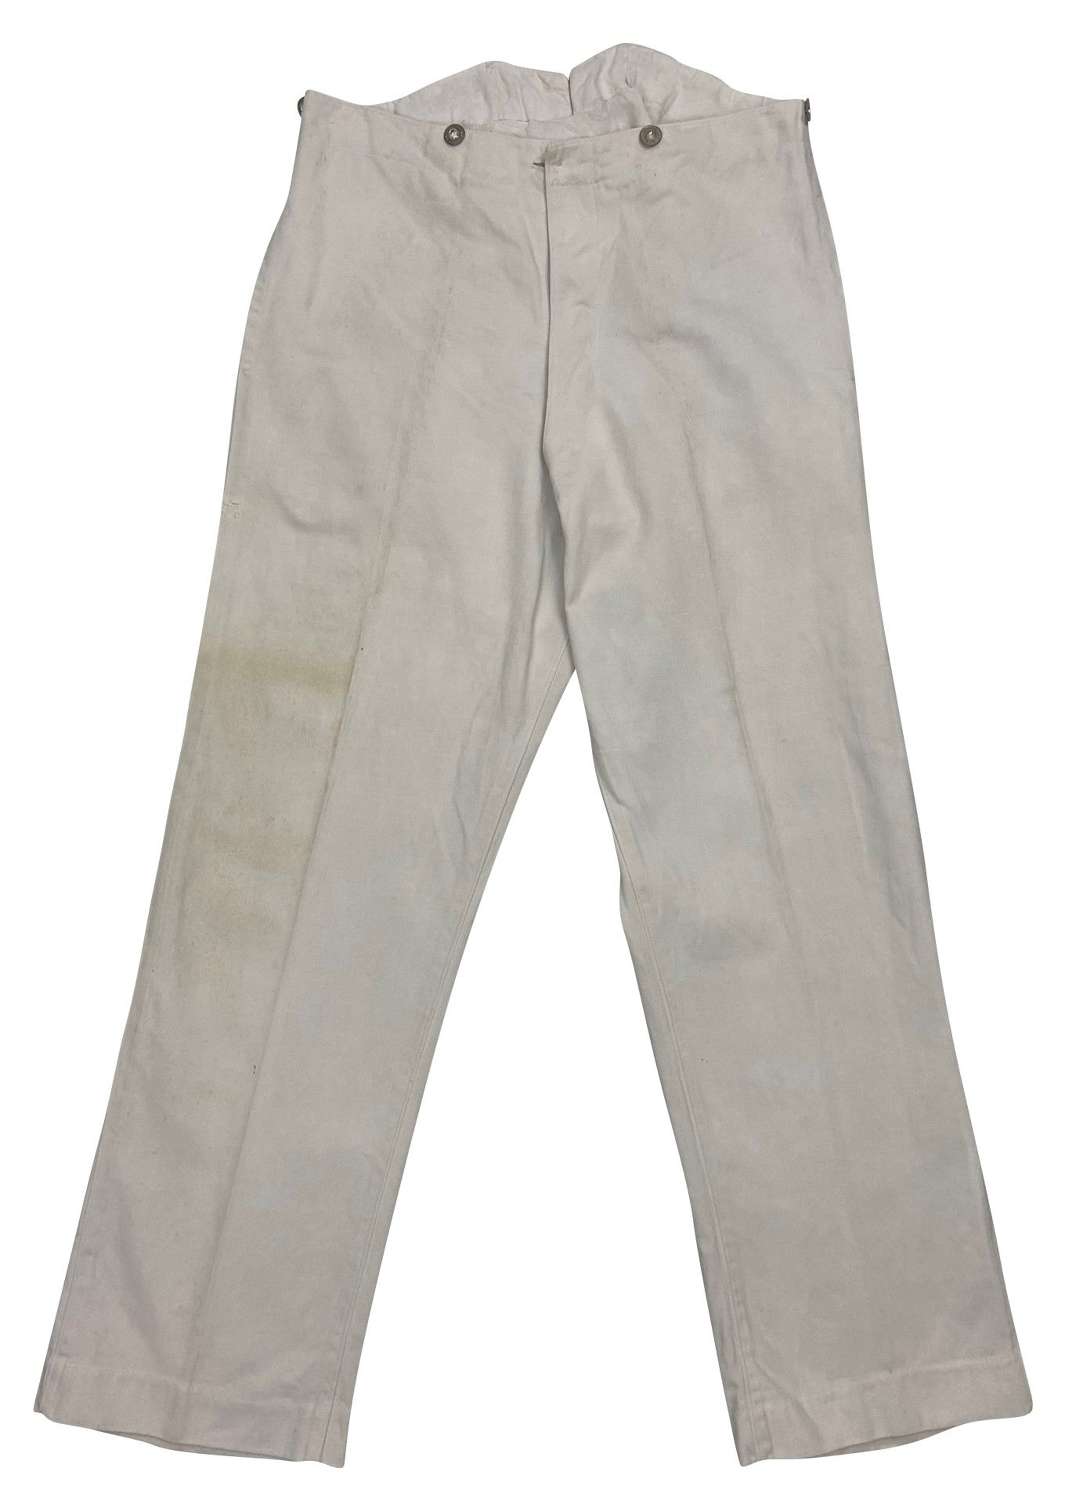 Original 1930s Royal Navy White Cotton Work Trousers